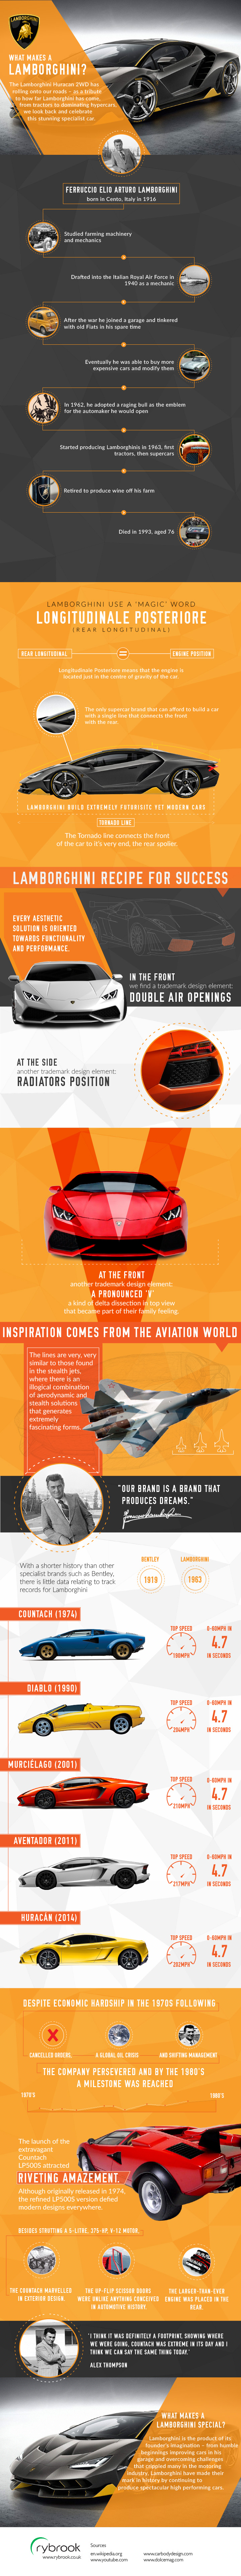 What Makes a Lamborghini?